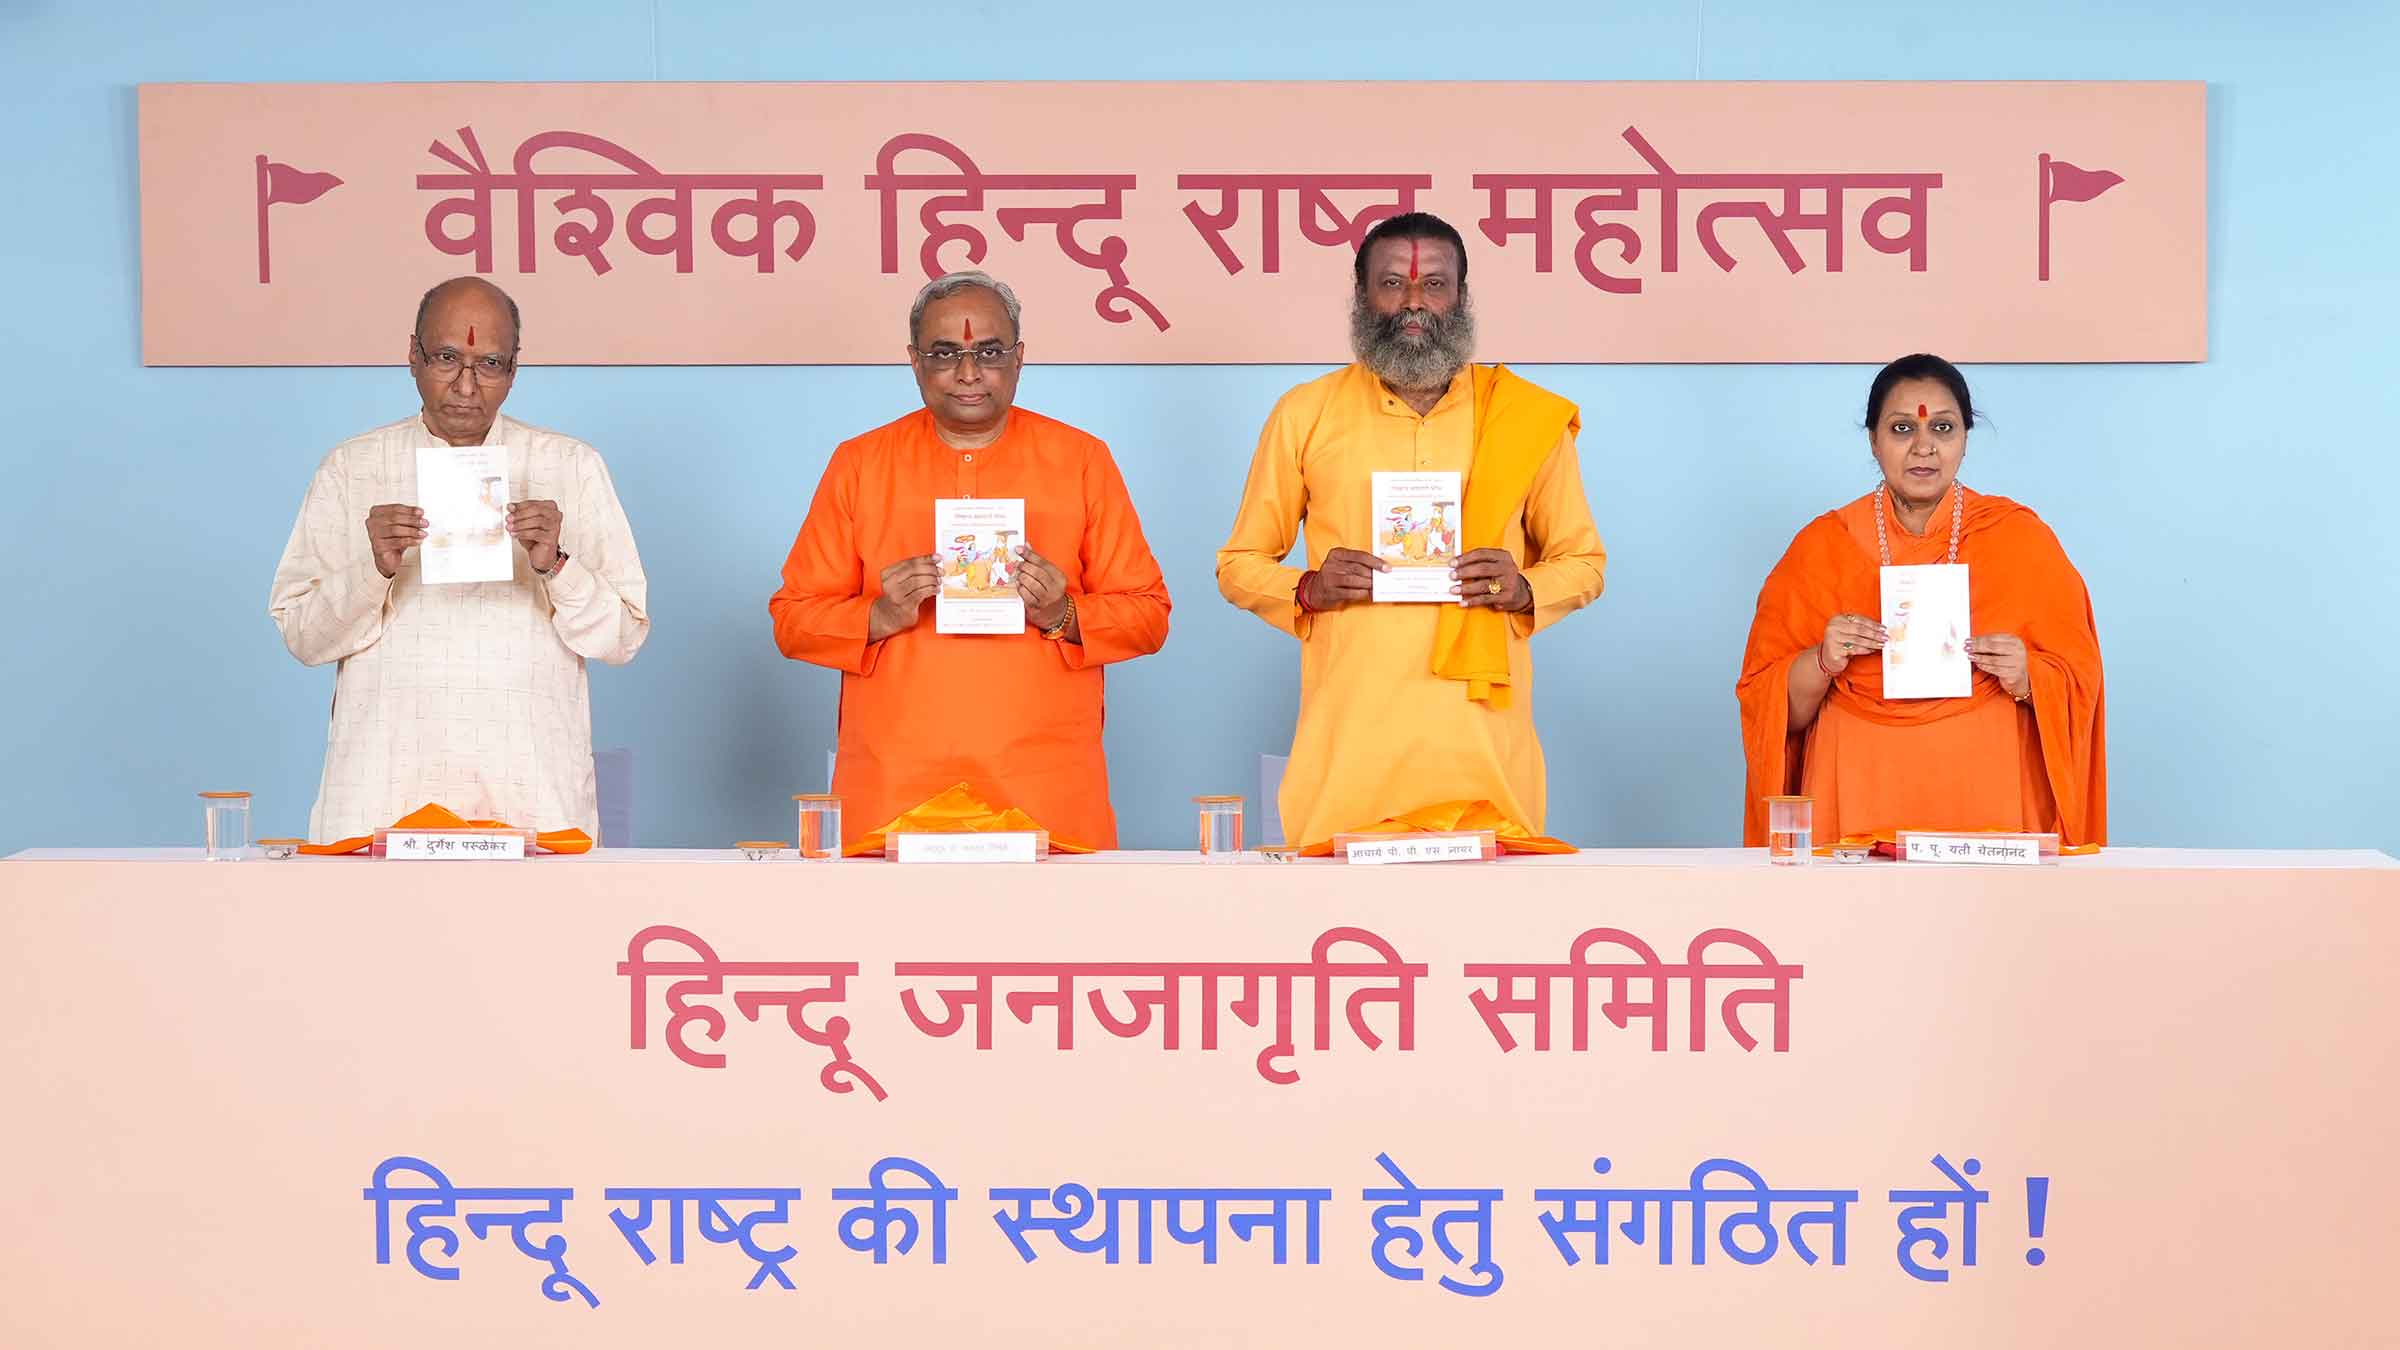 Saints releasing the Marathi Text - 'Nishkam Karmayogi Bhishma' - Authored by Mr Durgesh Parulkar